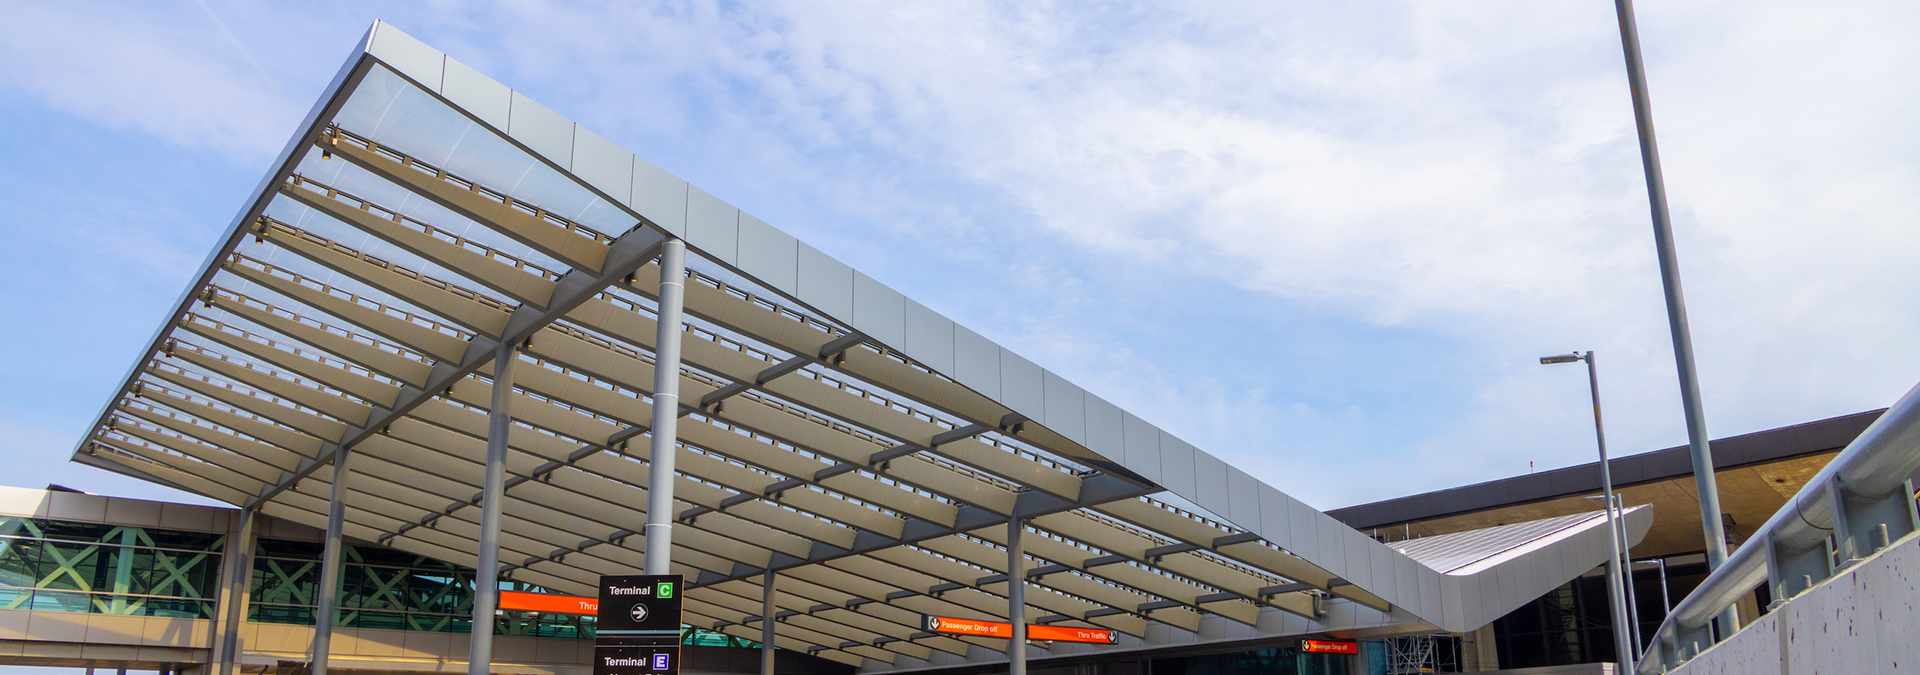 Terminal C Canopy